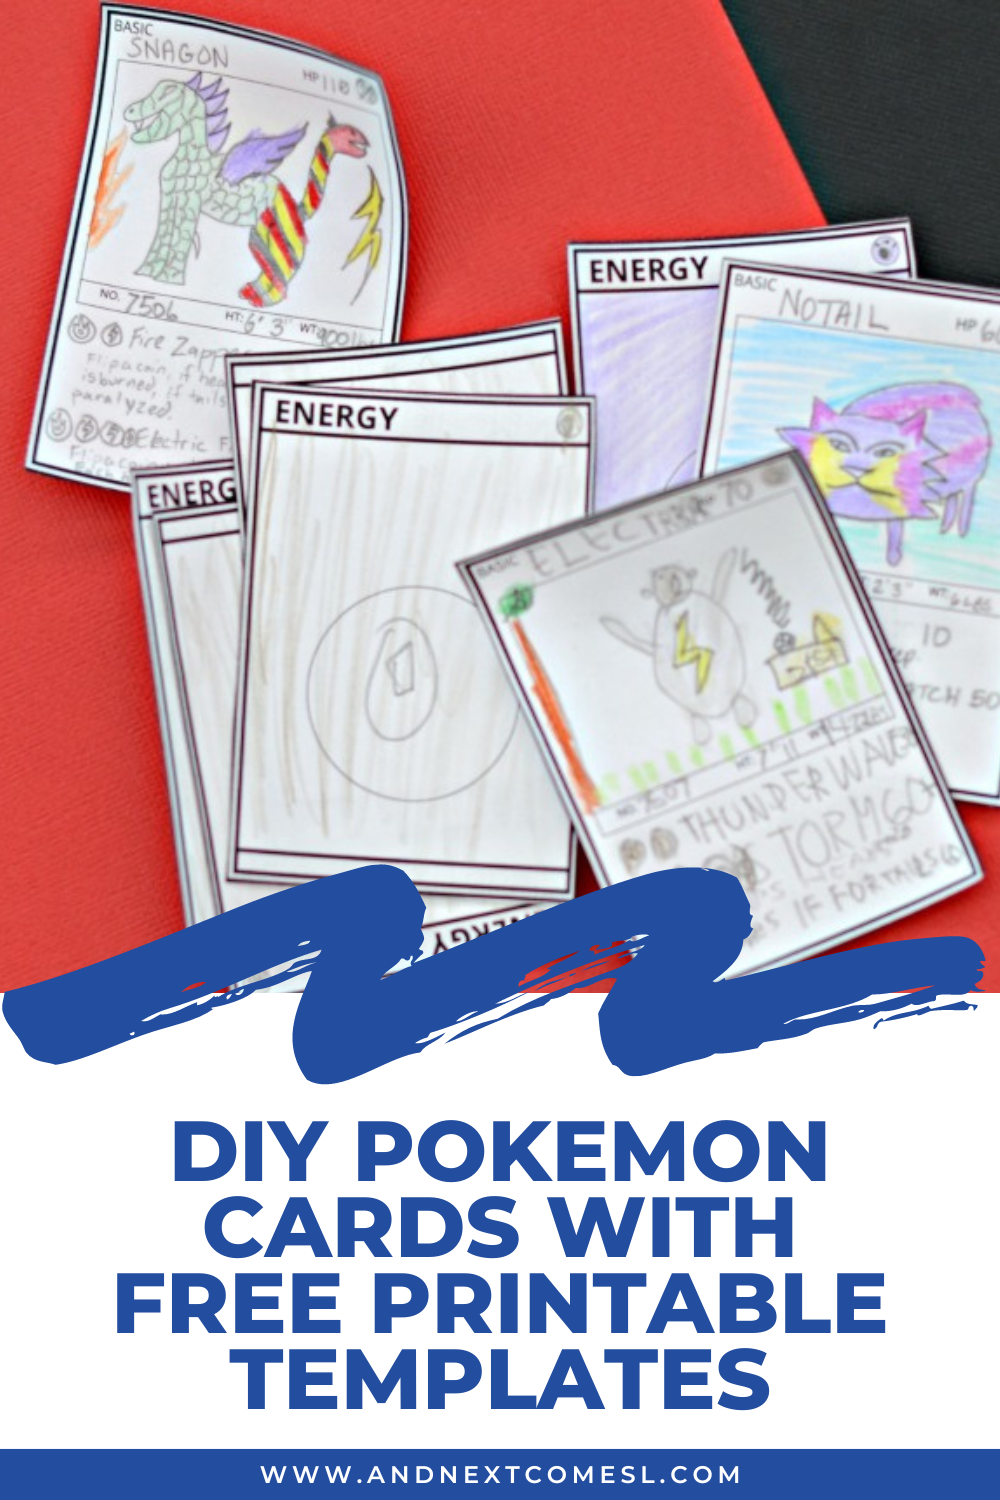 DIY Pokemon Card Templates Free Printable! | And Next Comes L -  Hyperlexia Resources